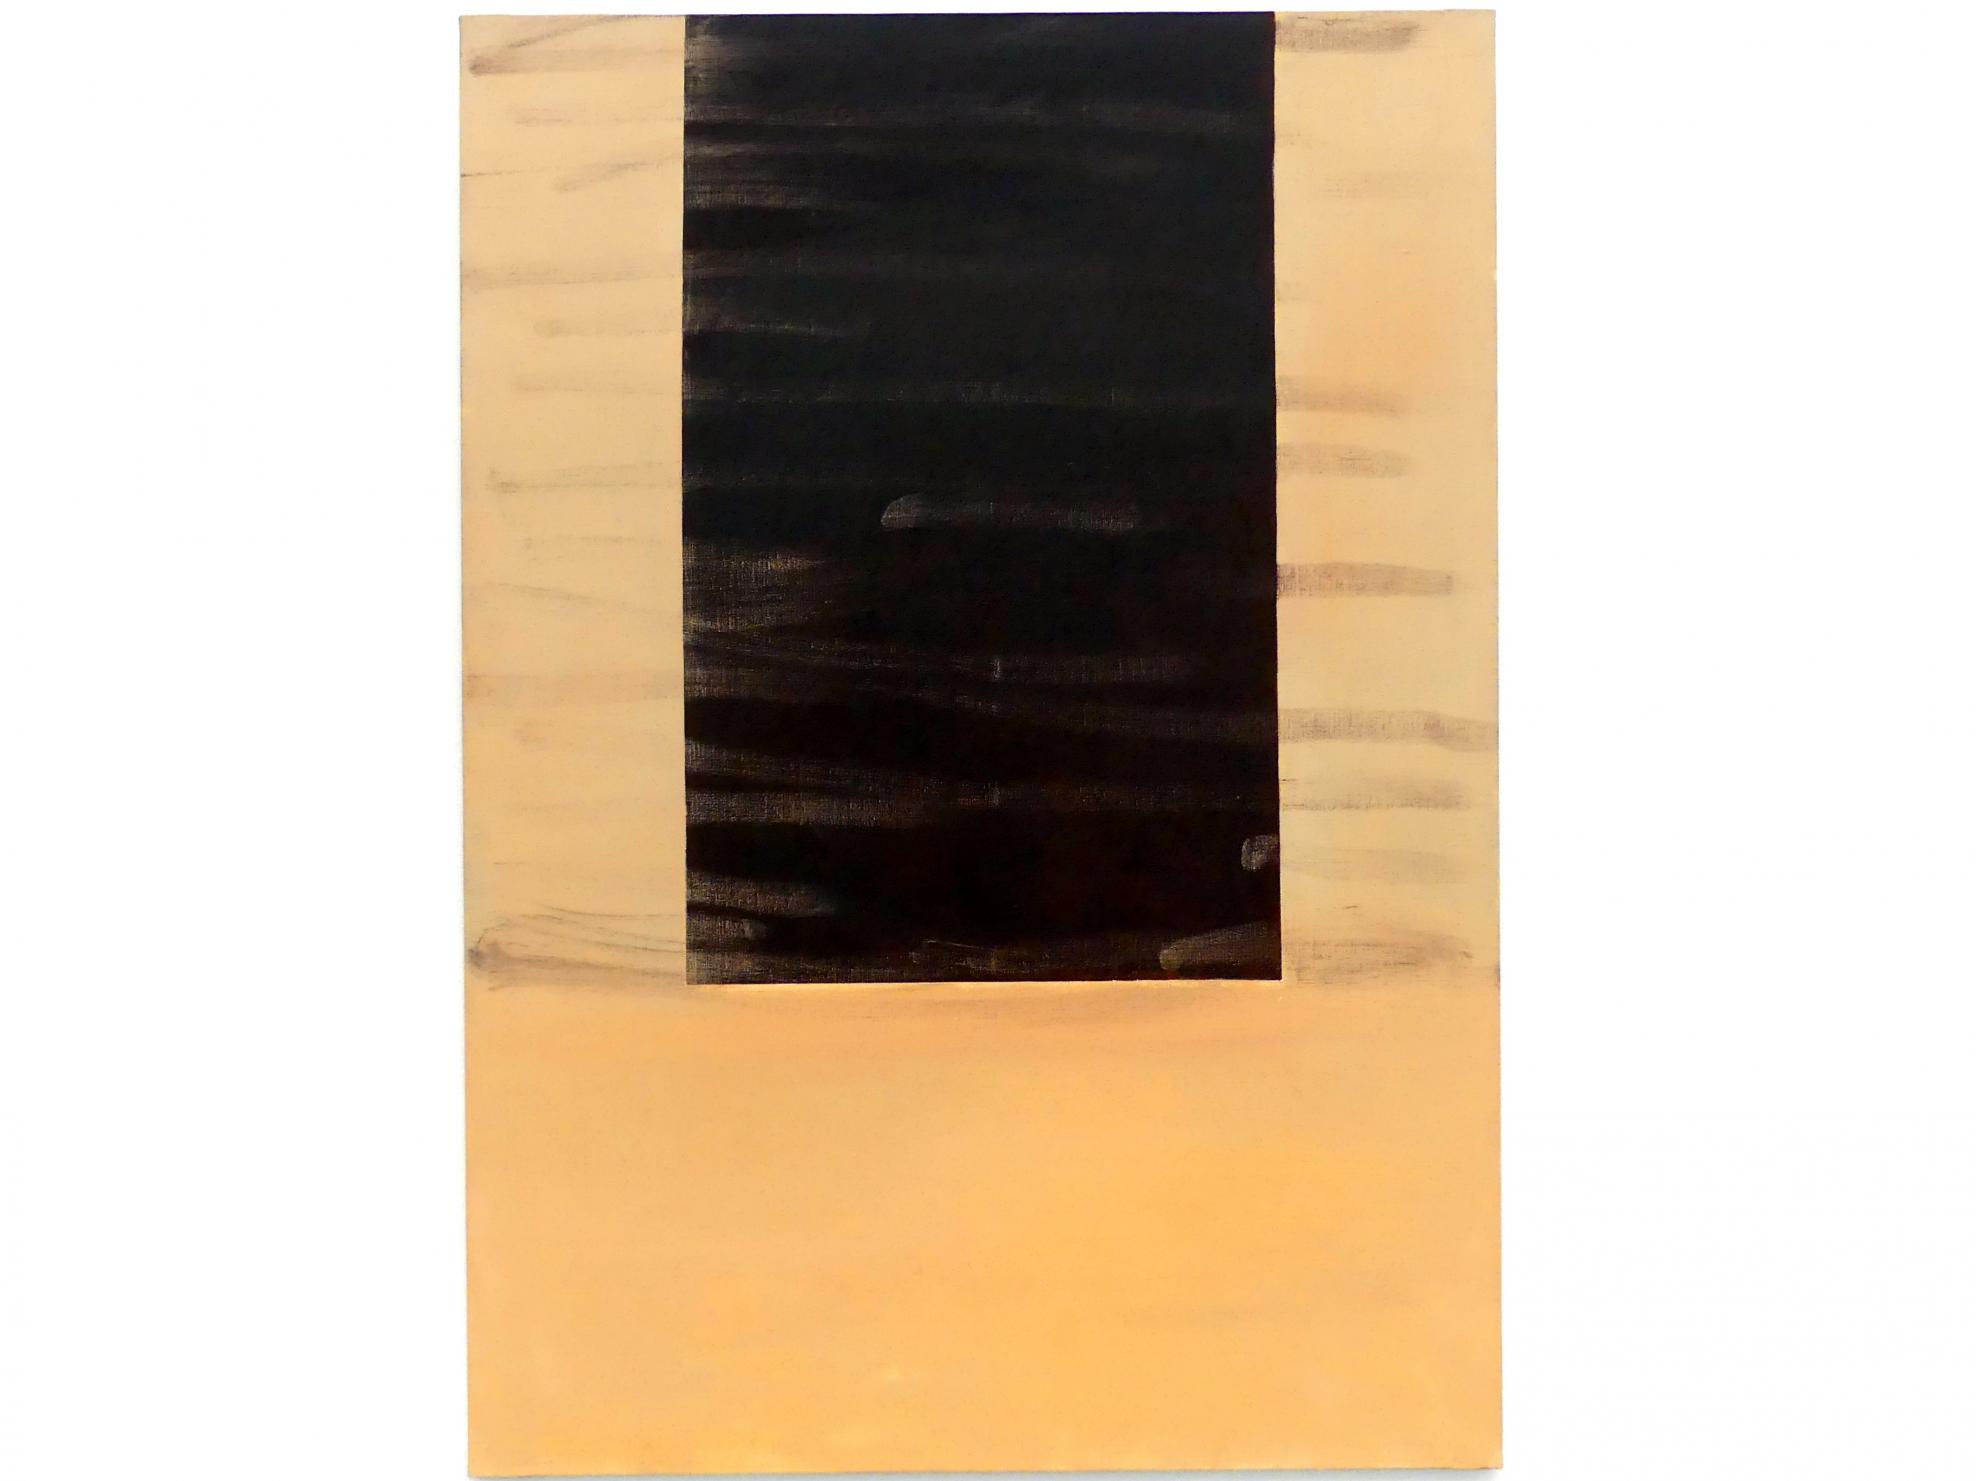 Raoul De Keyser (1964–2012), Untitled, München, Pinakothek der Moderne, Ausstellung "Raoul De Keyser – Œuvre" vom 05.04.-08.09.2019, Saal 21, 1990